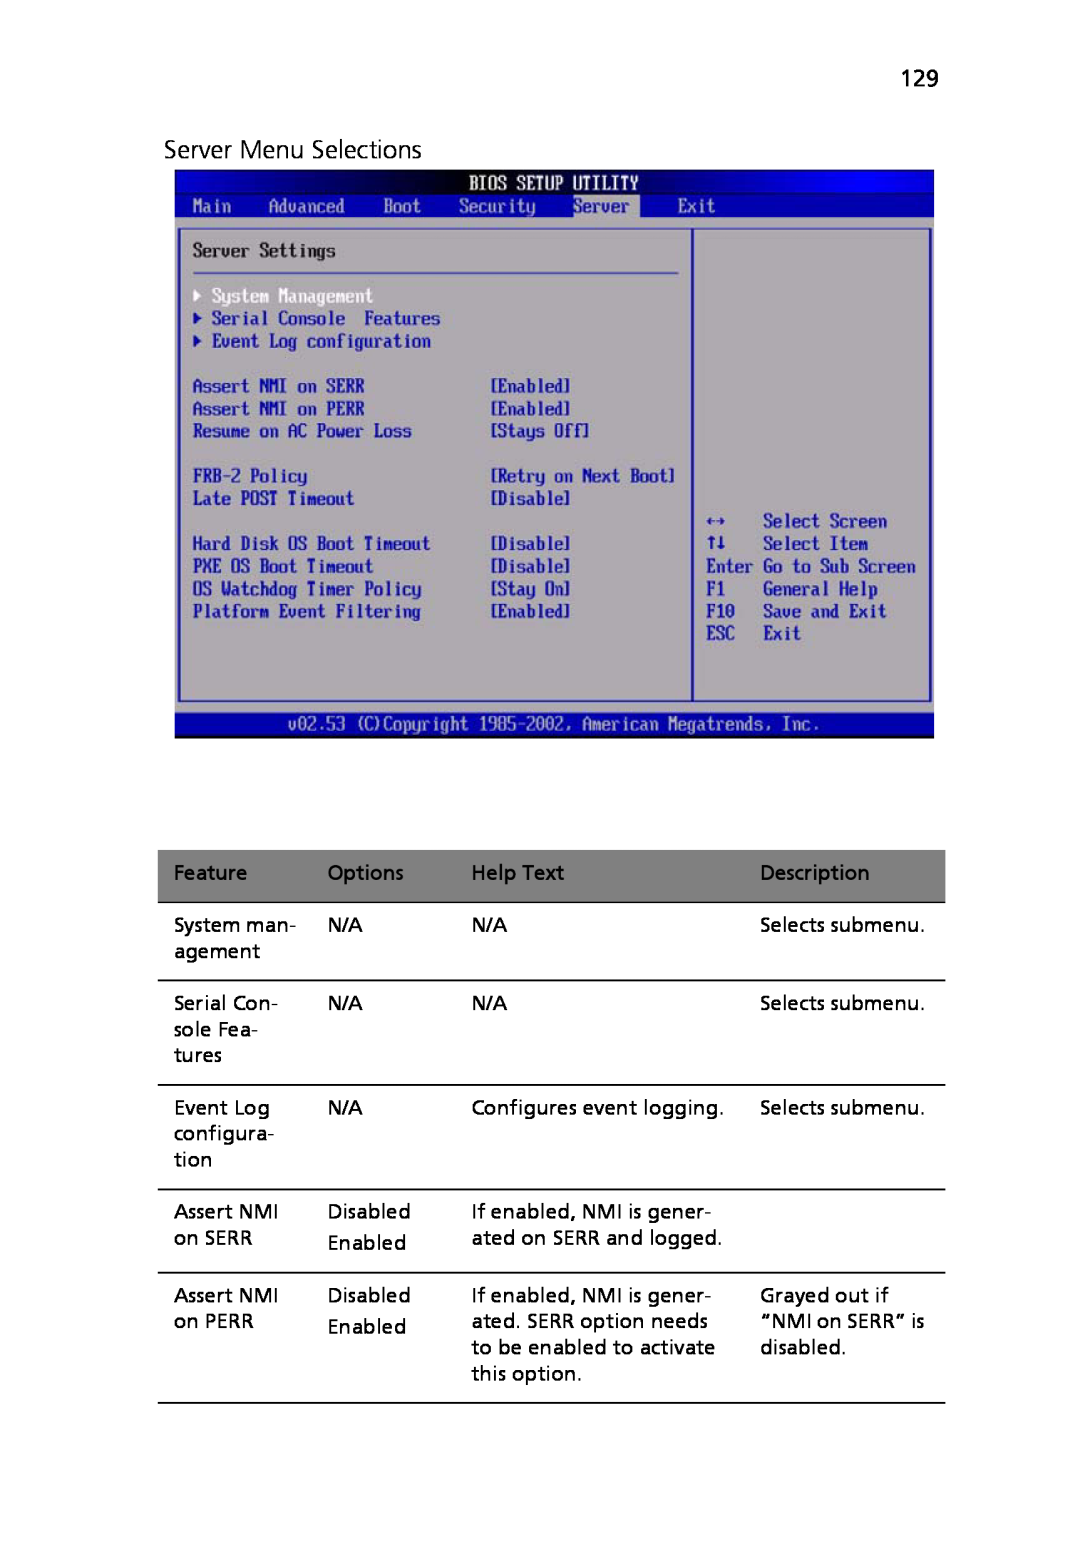 Acer Altos R710 manual Server Menu Selections, Feature, Options, Help Text, Description 